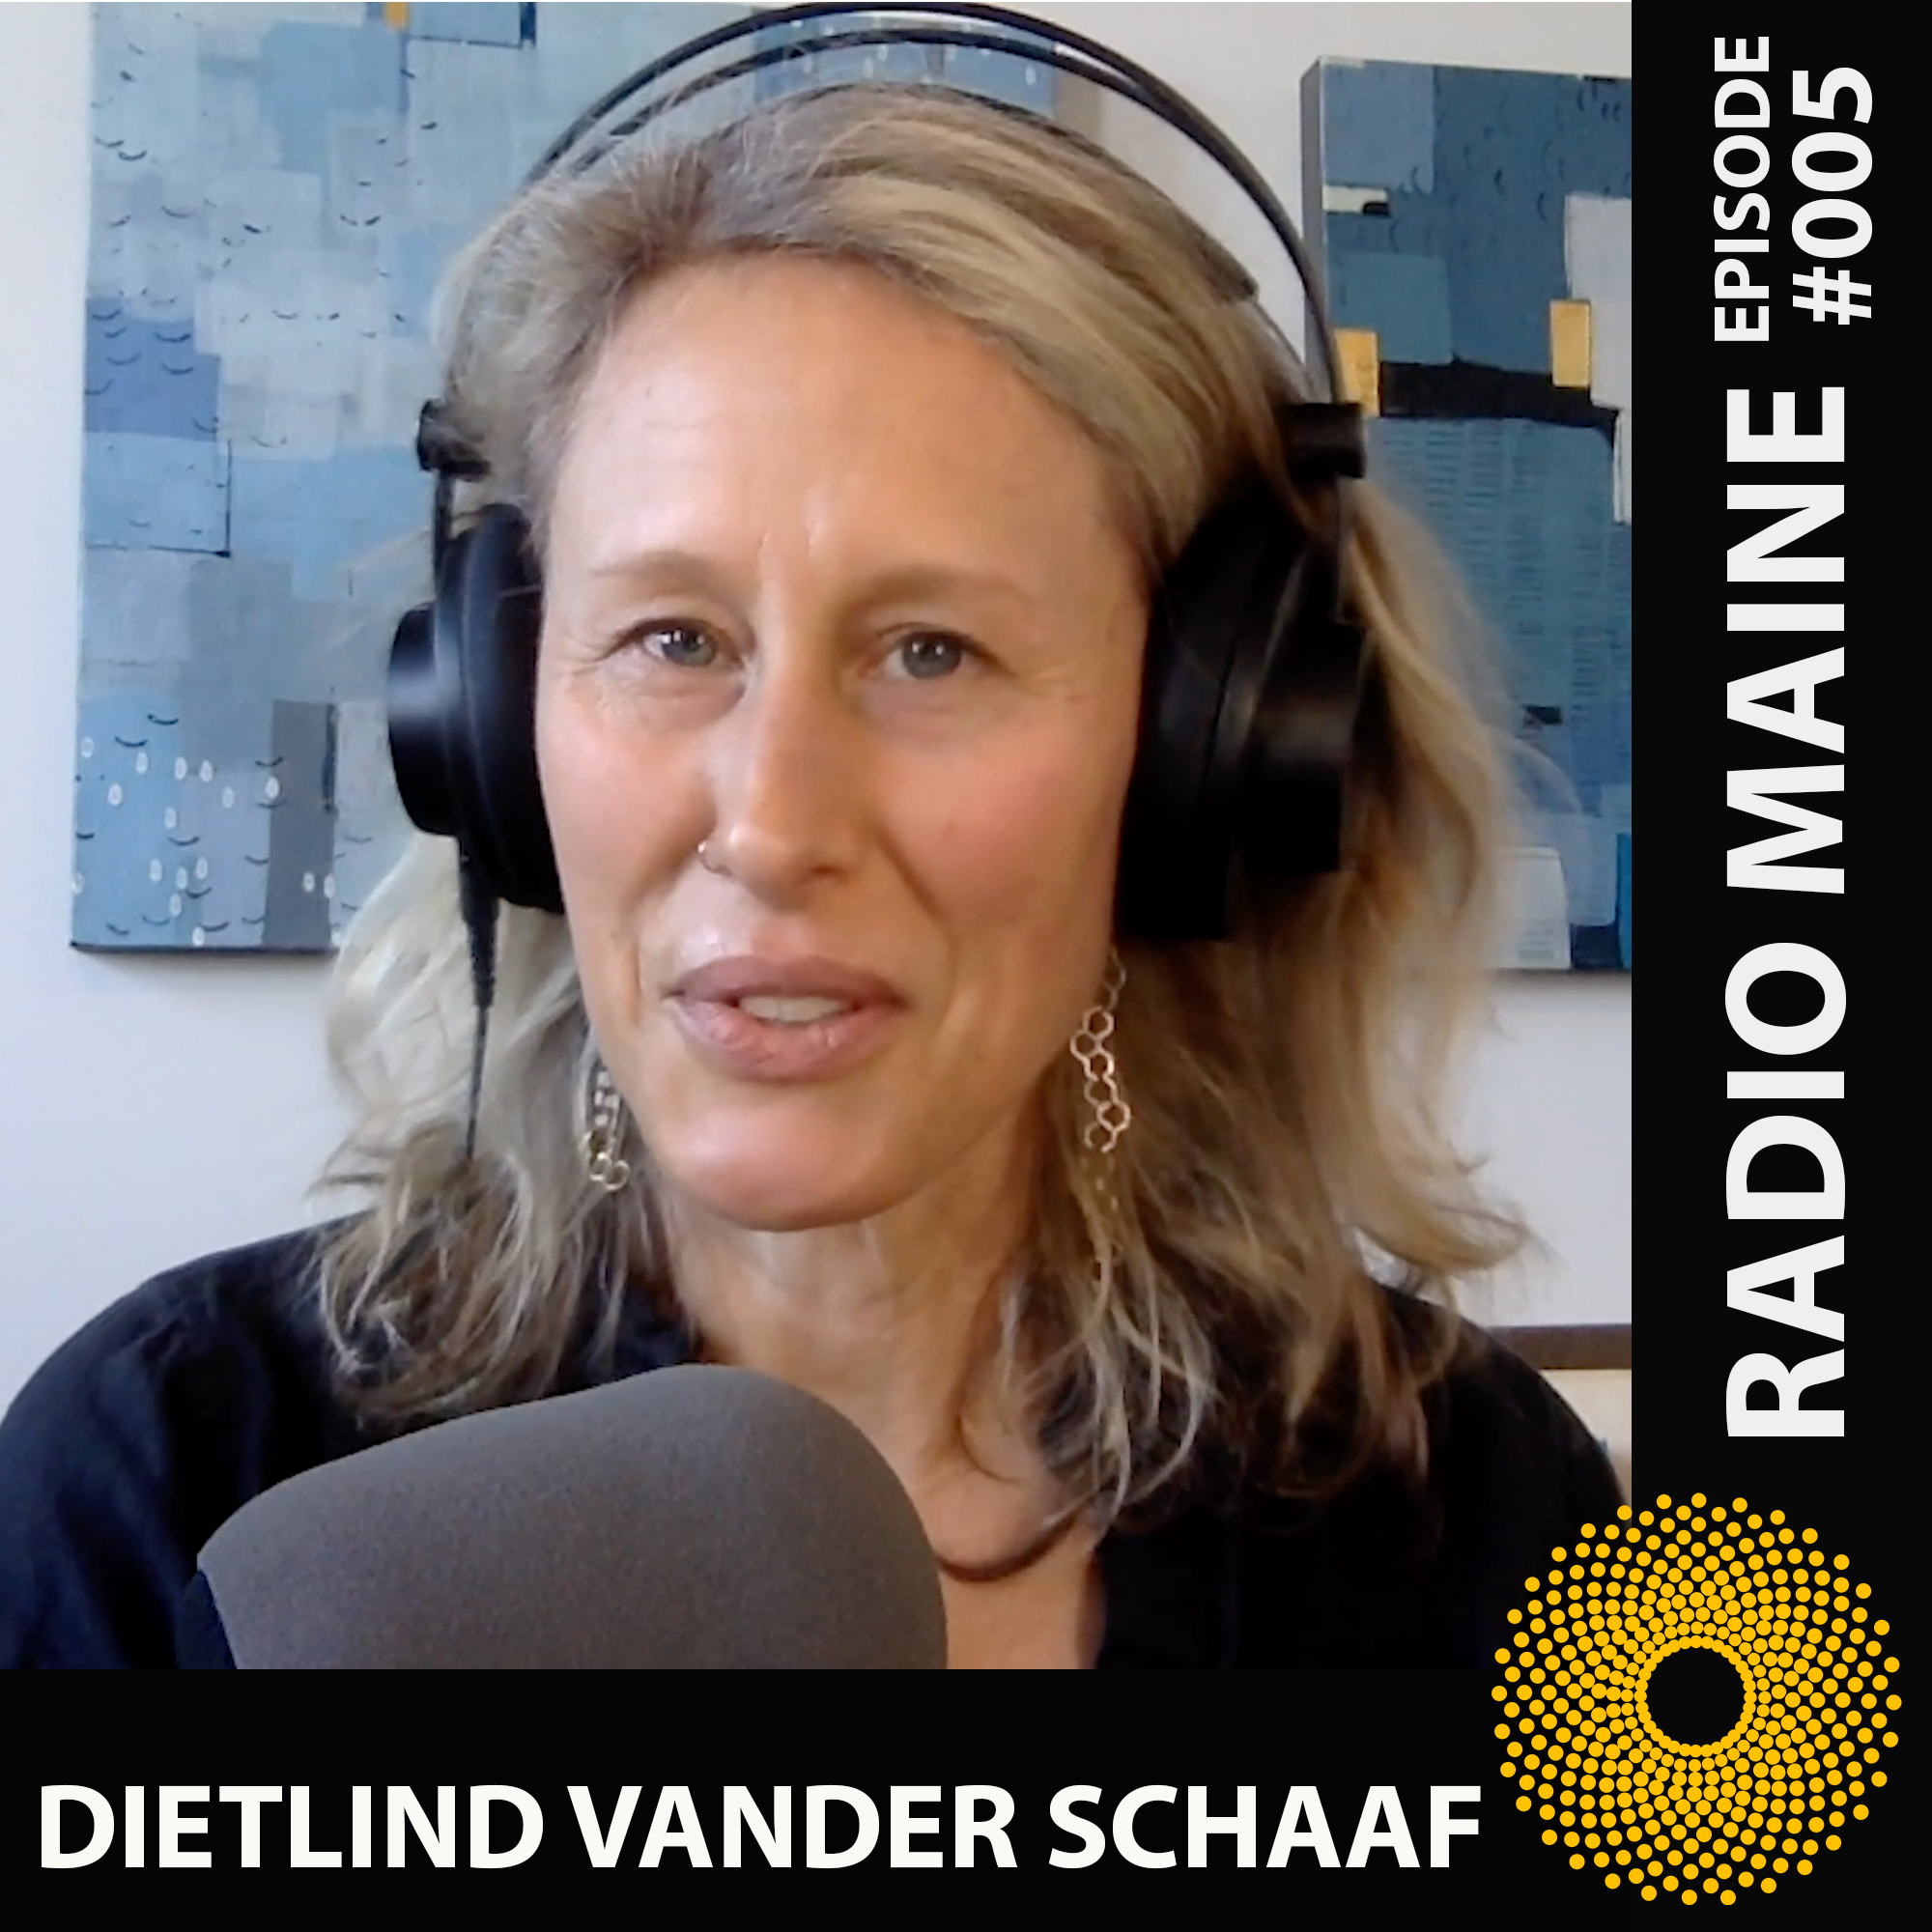 Maine artist Dietlind Vander Schaaf being interviewed on Radio Maine with Dr. Lisa Belisle